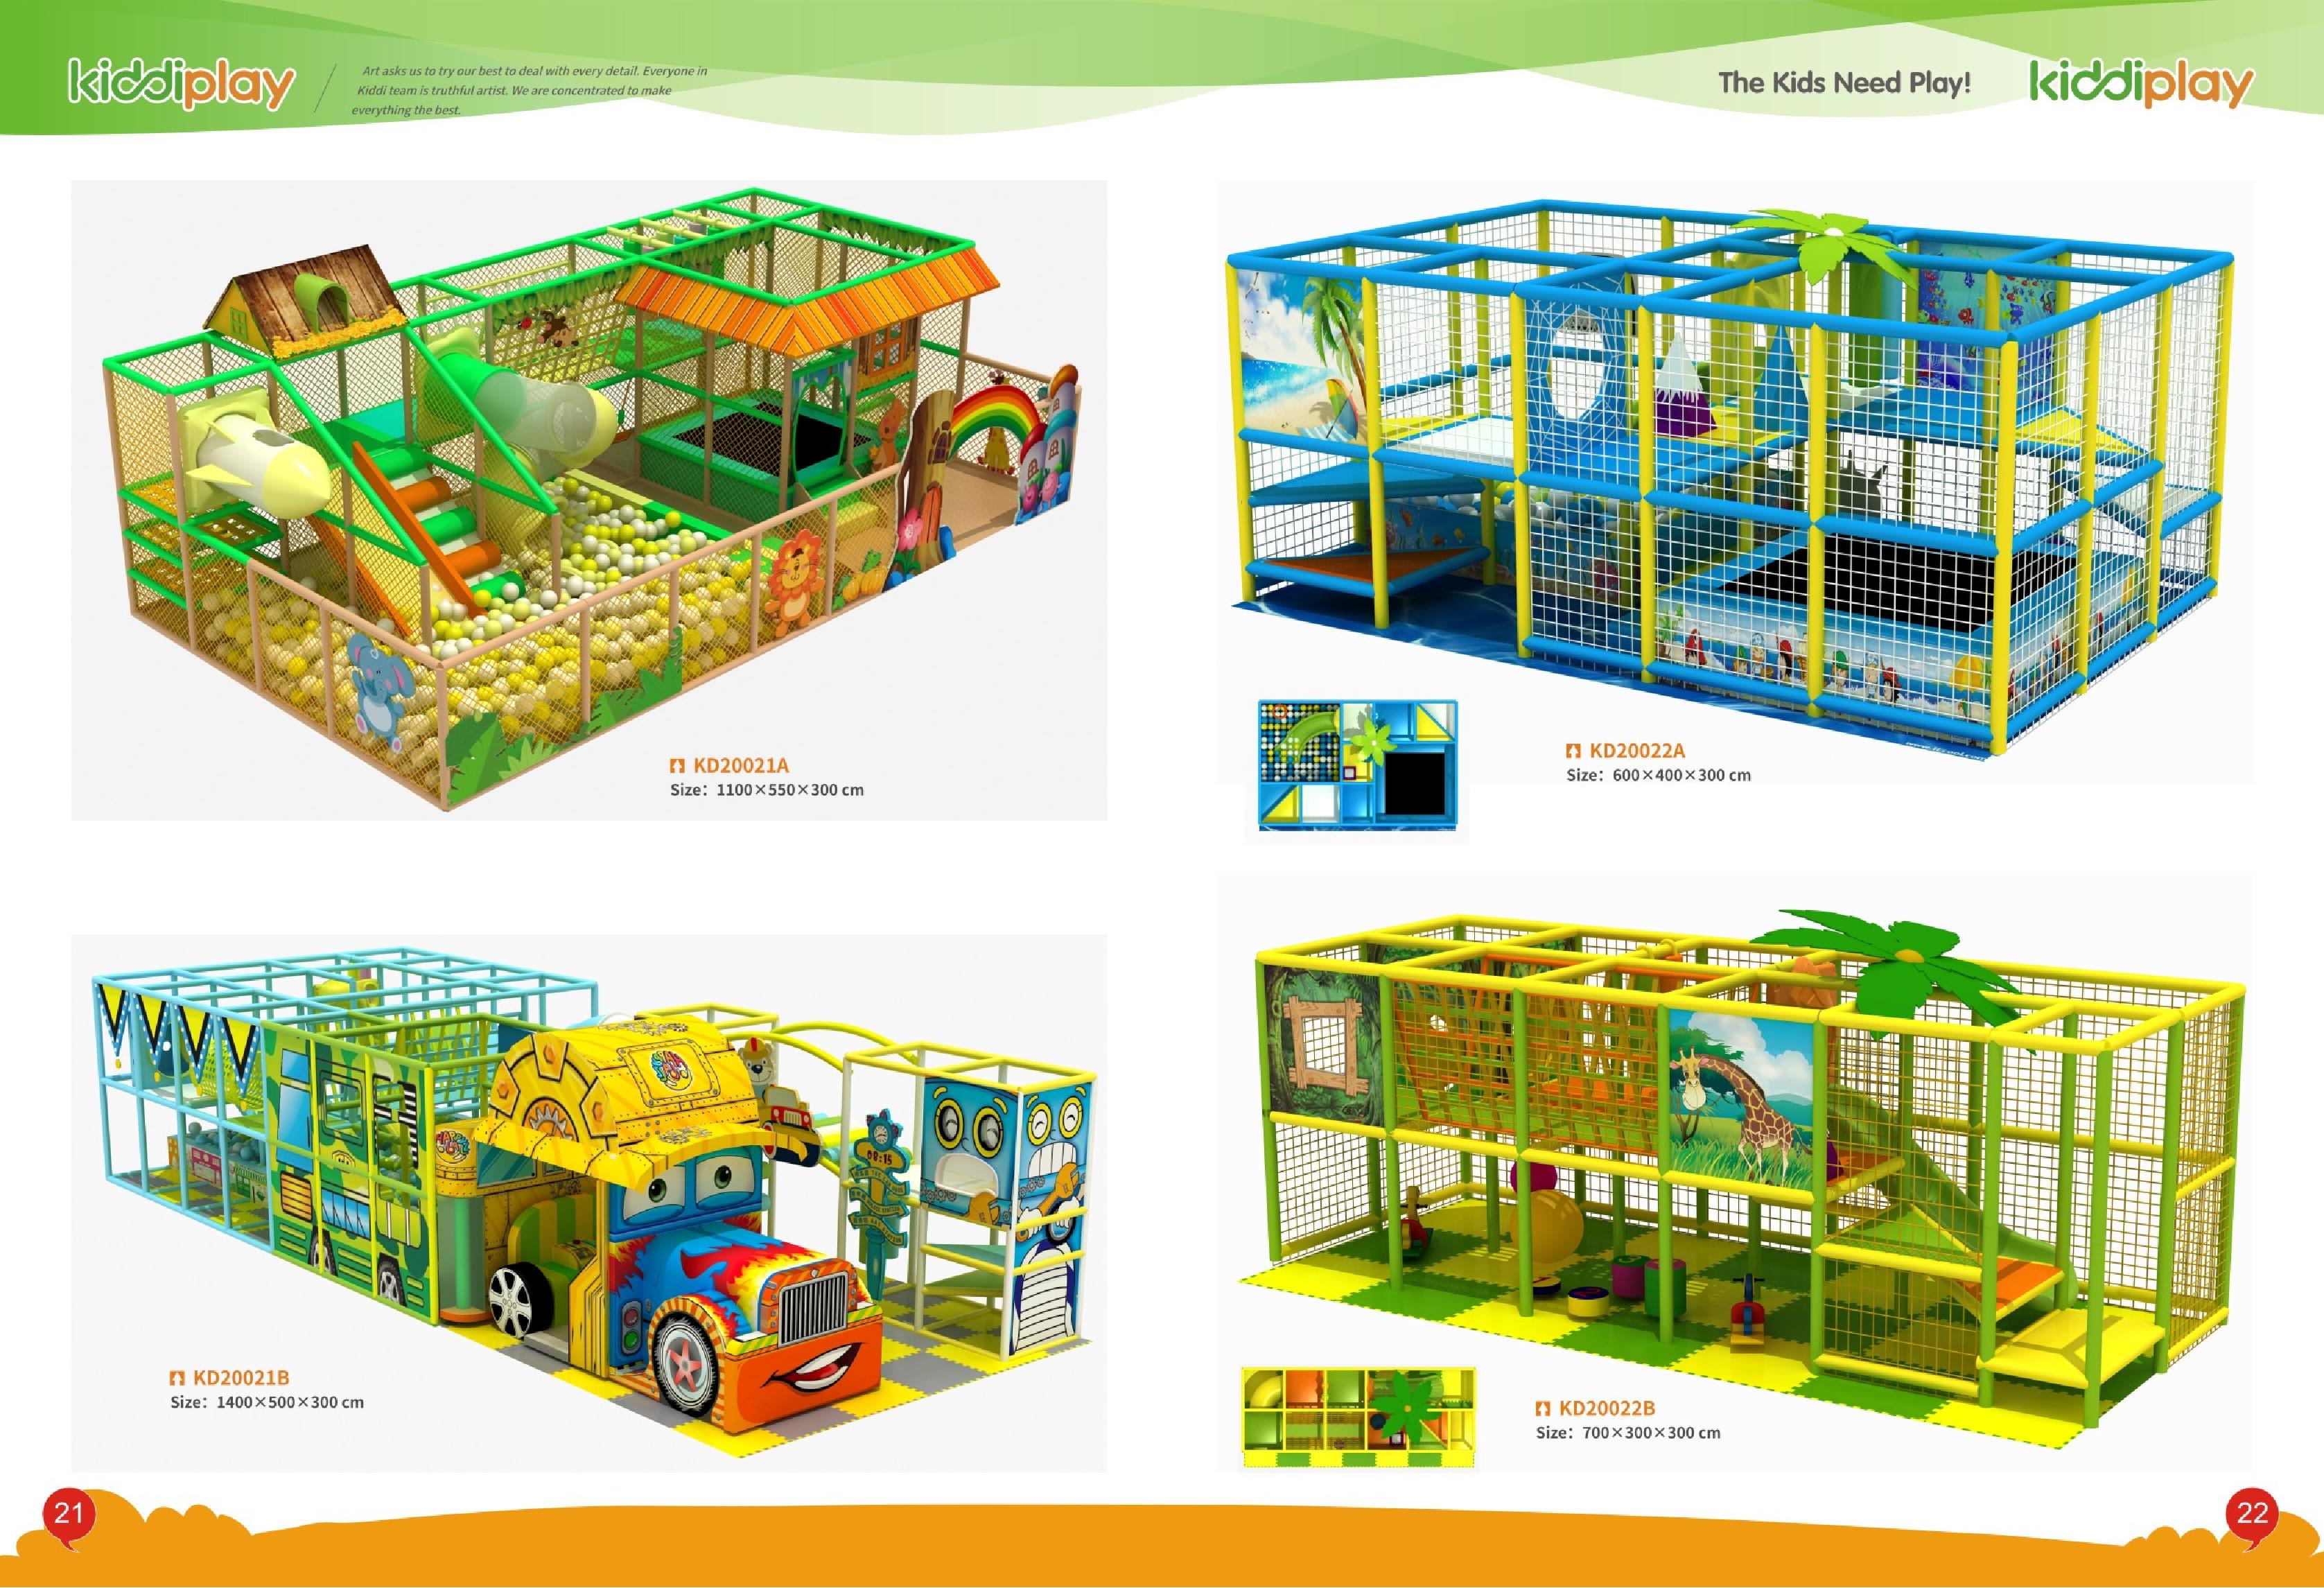 2019 Indoor Playground and Trampoline Parks - KiddiPlay_12.jpg